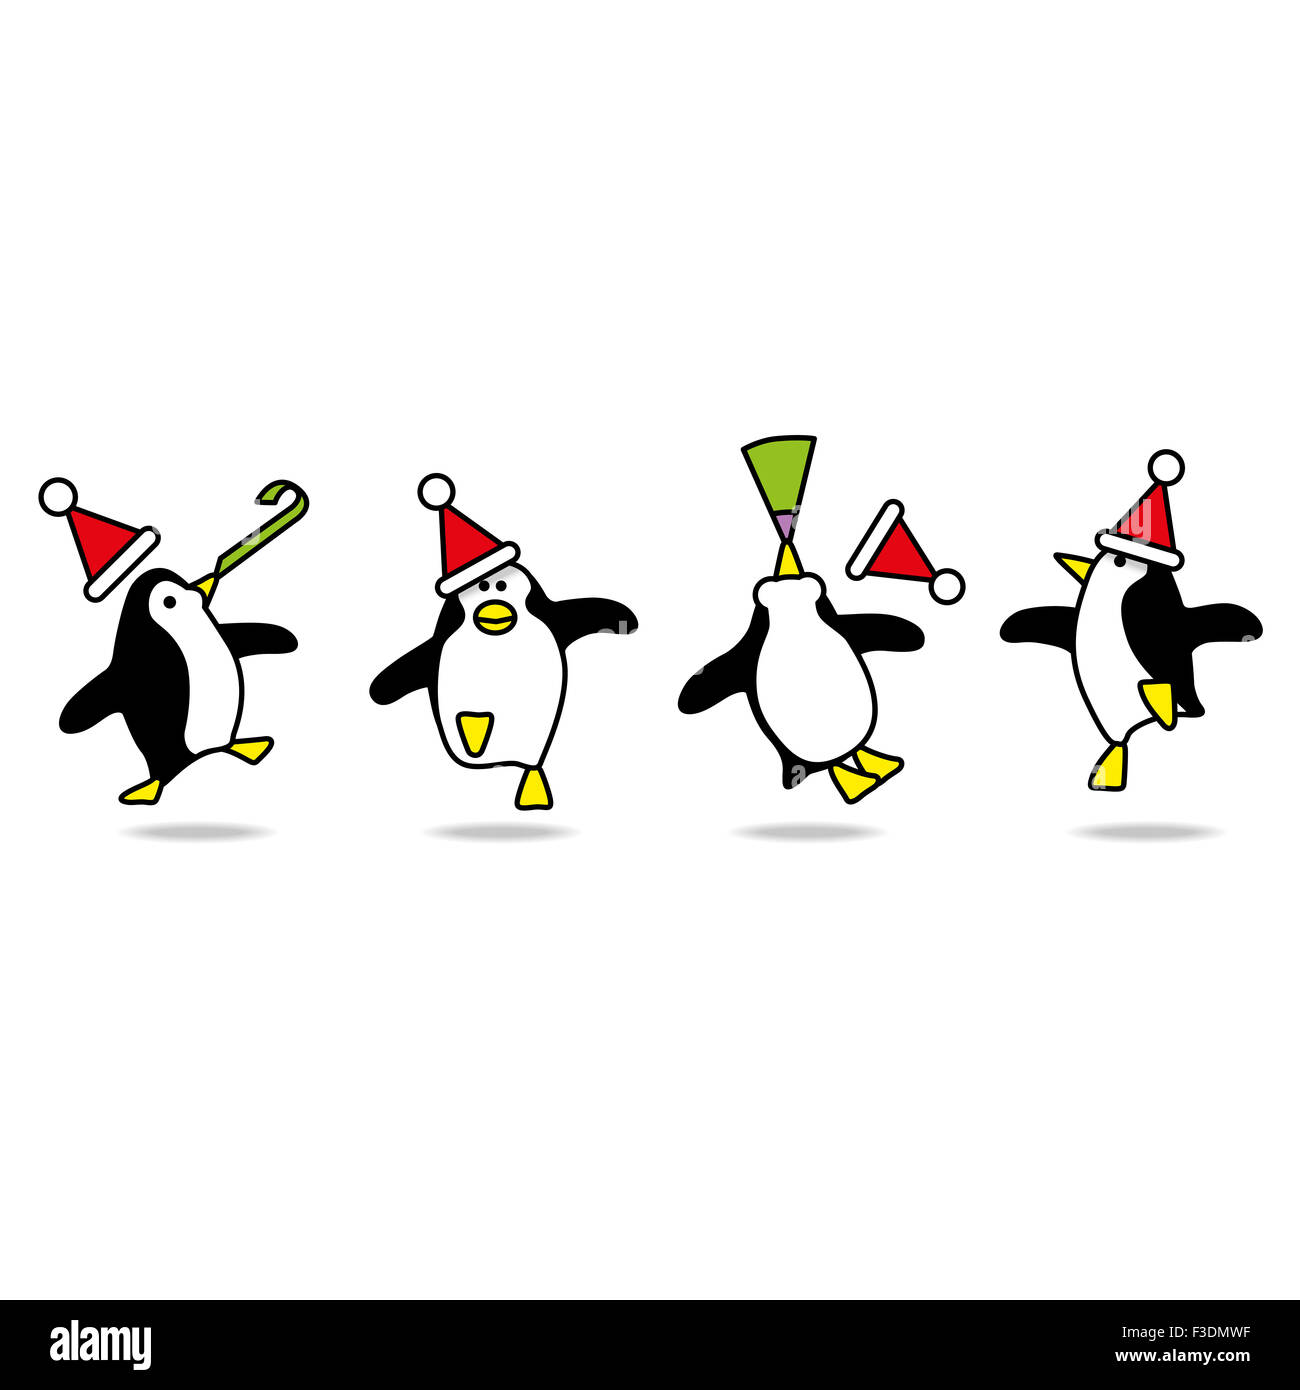 Four Happy Penguins wearing Santa Hats Dancing at fun Party Stock Photo